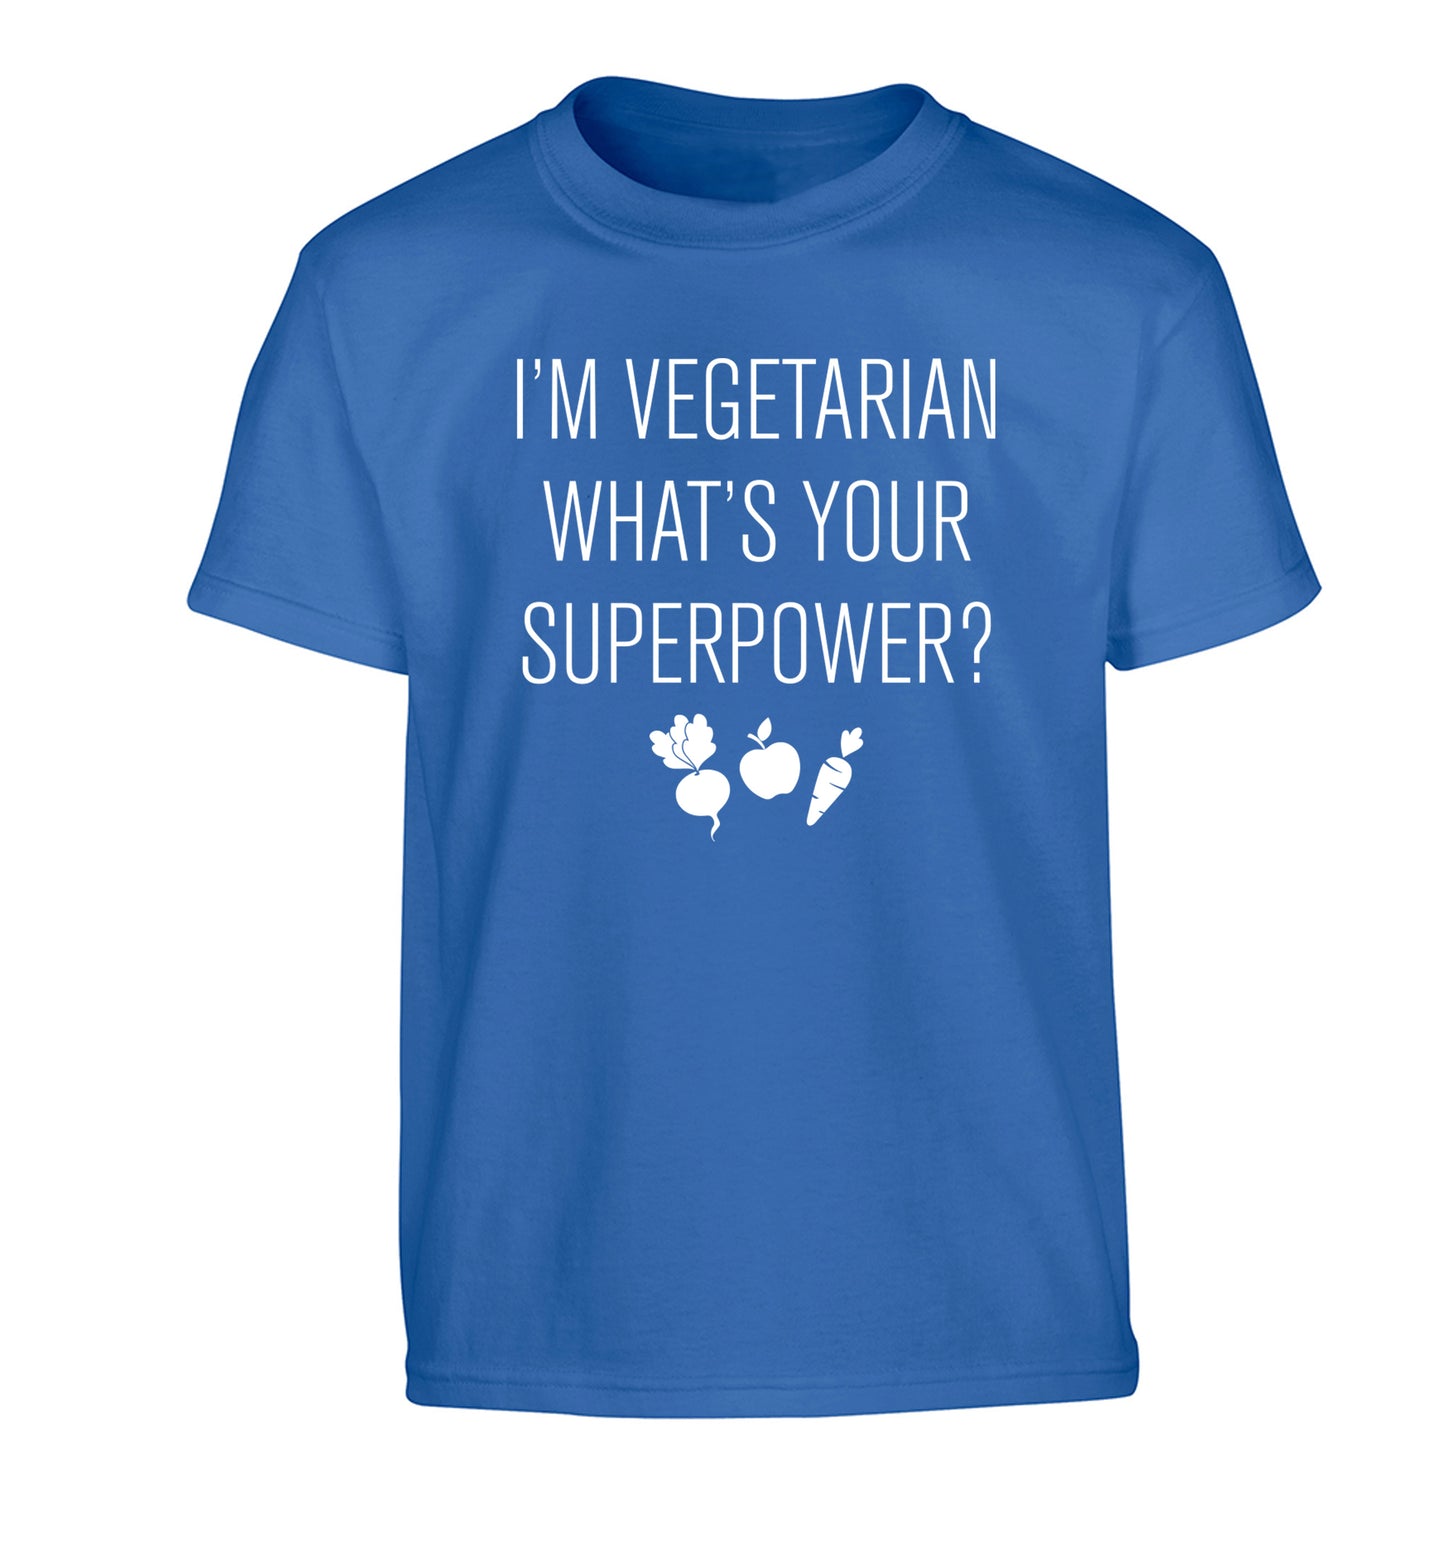 I'm vegetarian what's your superpower? Children's blue Tshirt 12-13 Years